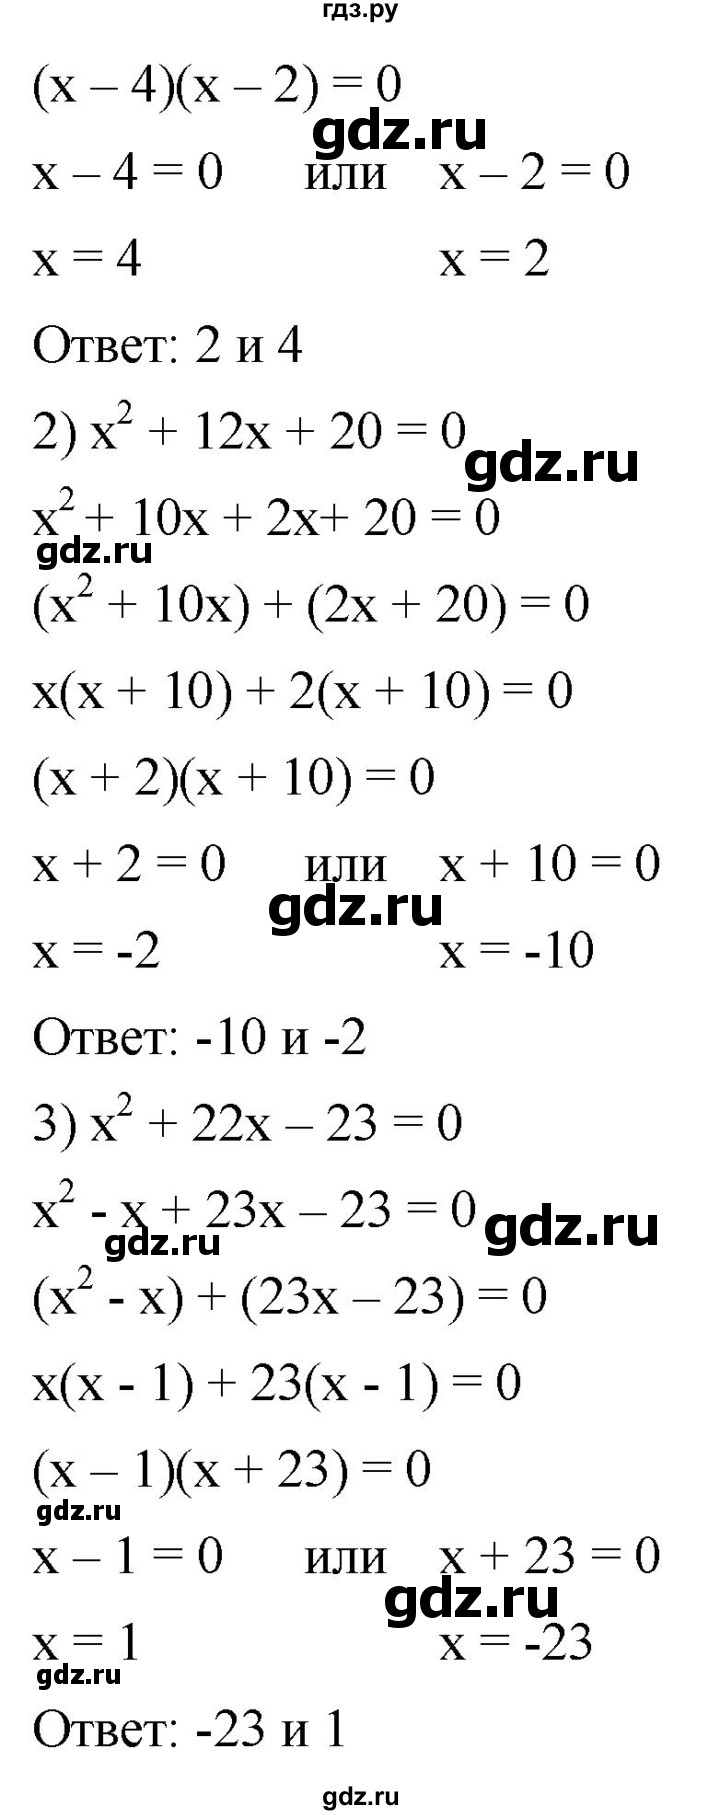 ГДЗ по алгебре 8 класс  Мерзляк   номер - 637, Решебник к учебнику 2019